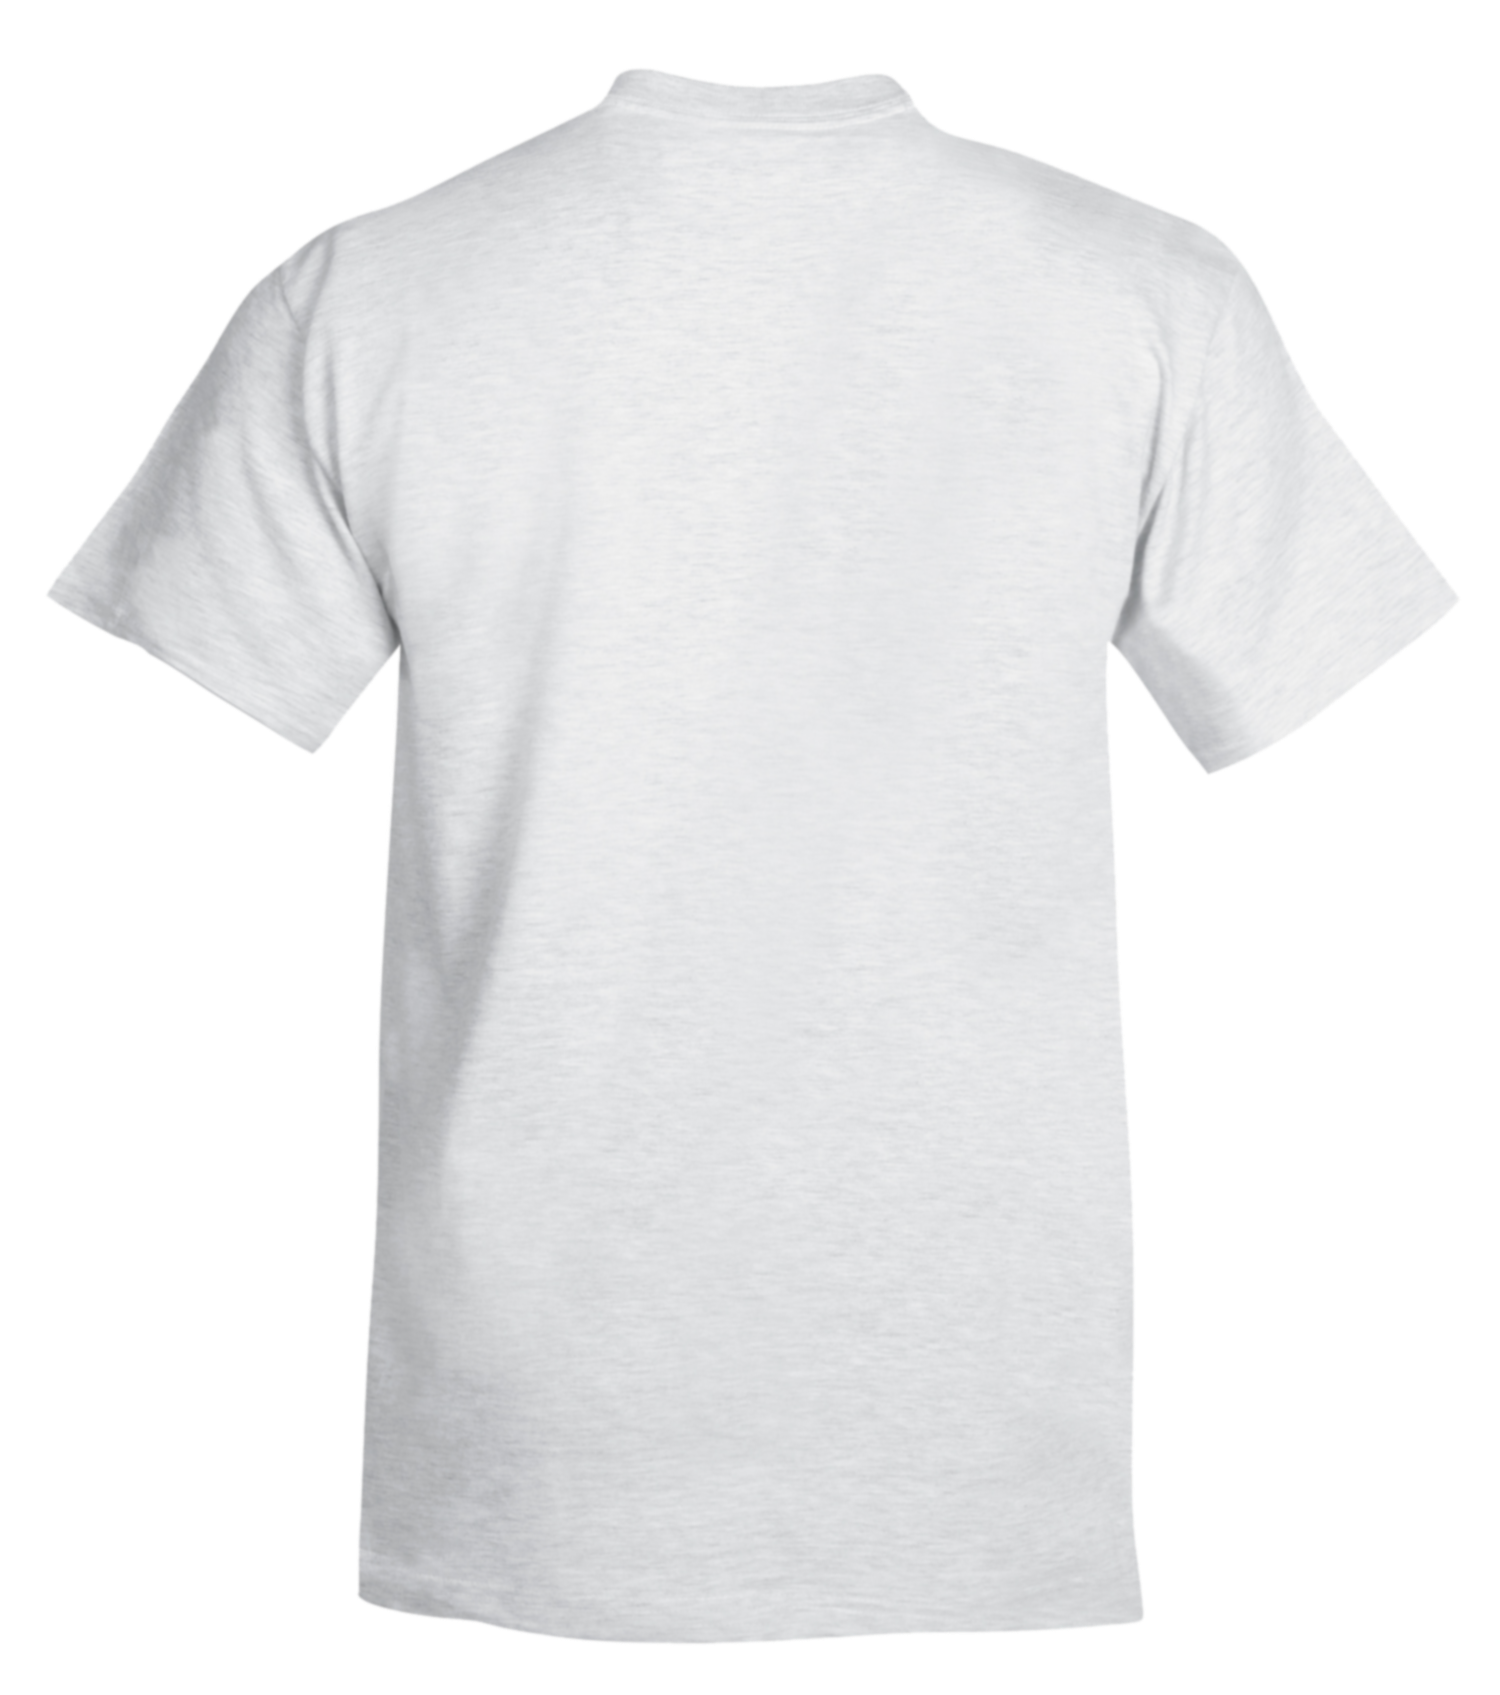 T-shirt Hanes White Hoodie - T-shirt png download - 1500*1695 - Free ...